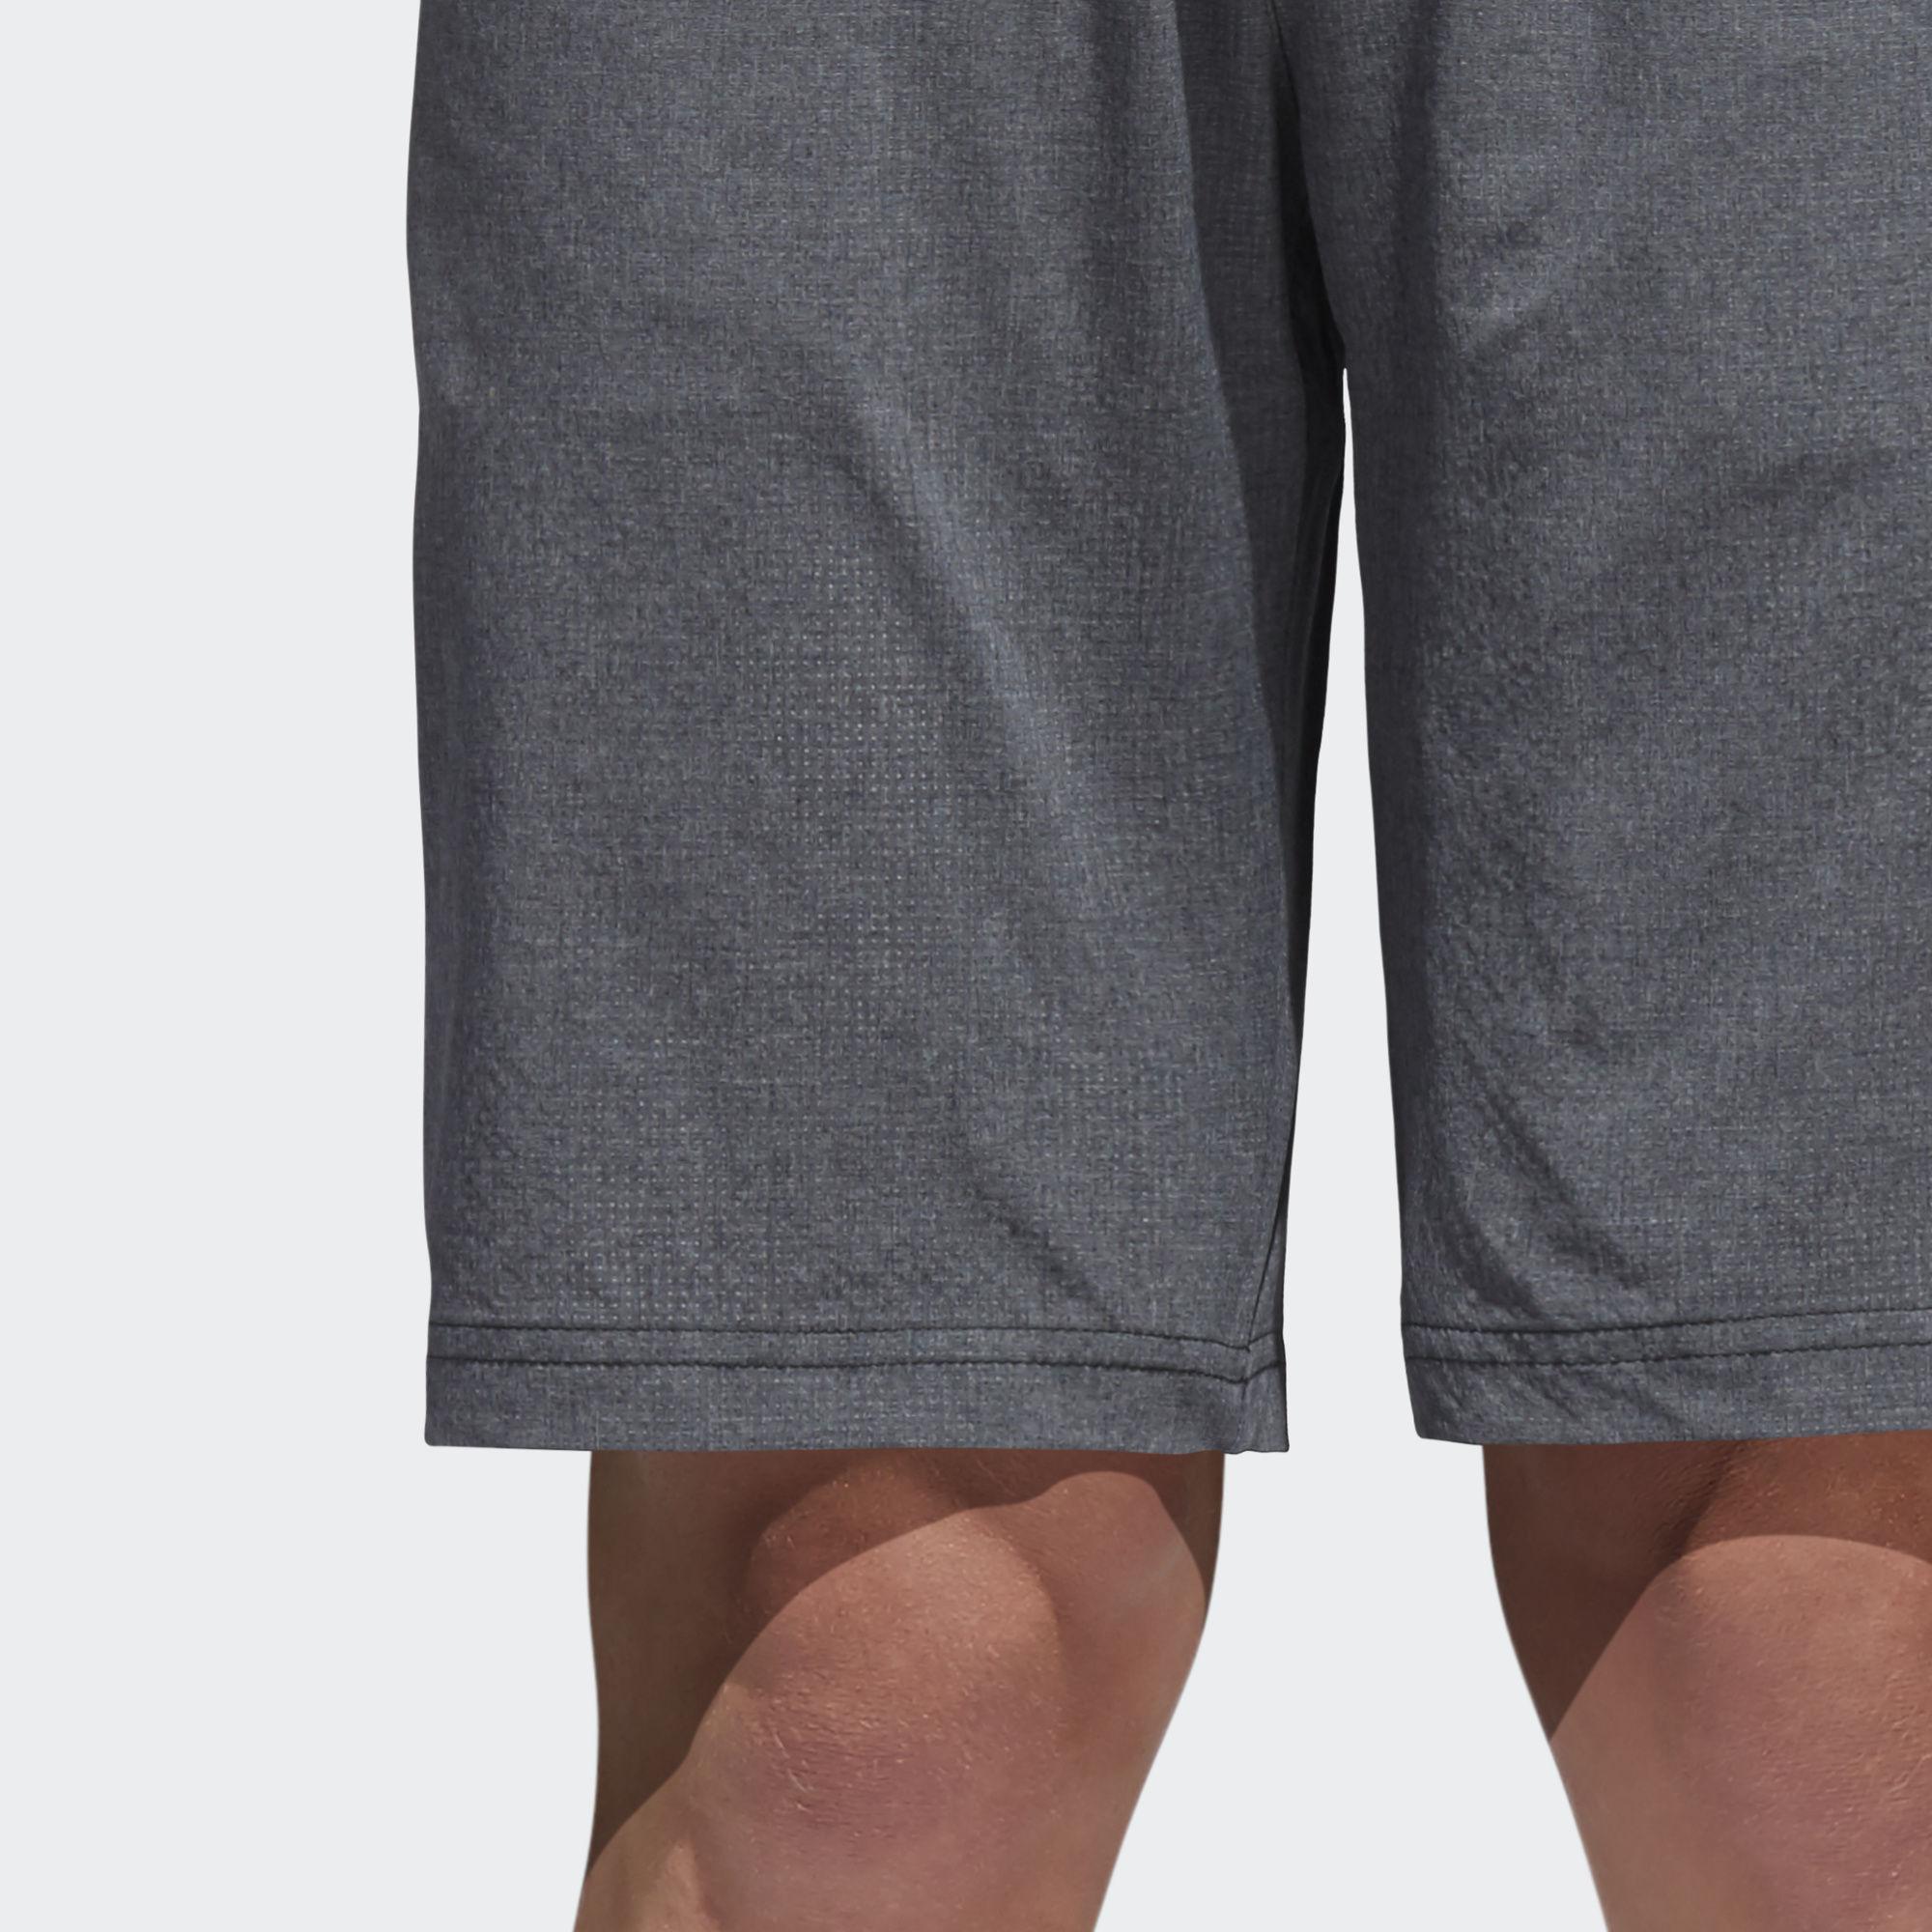 adicross range shorts